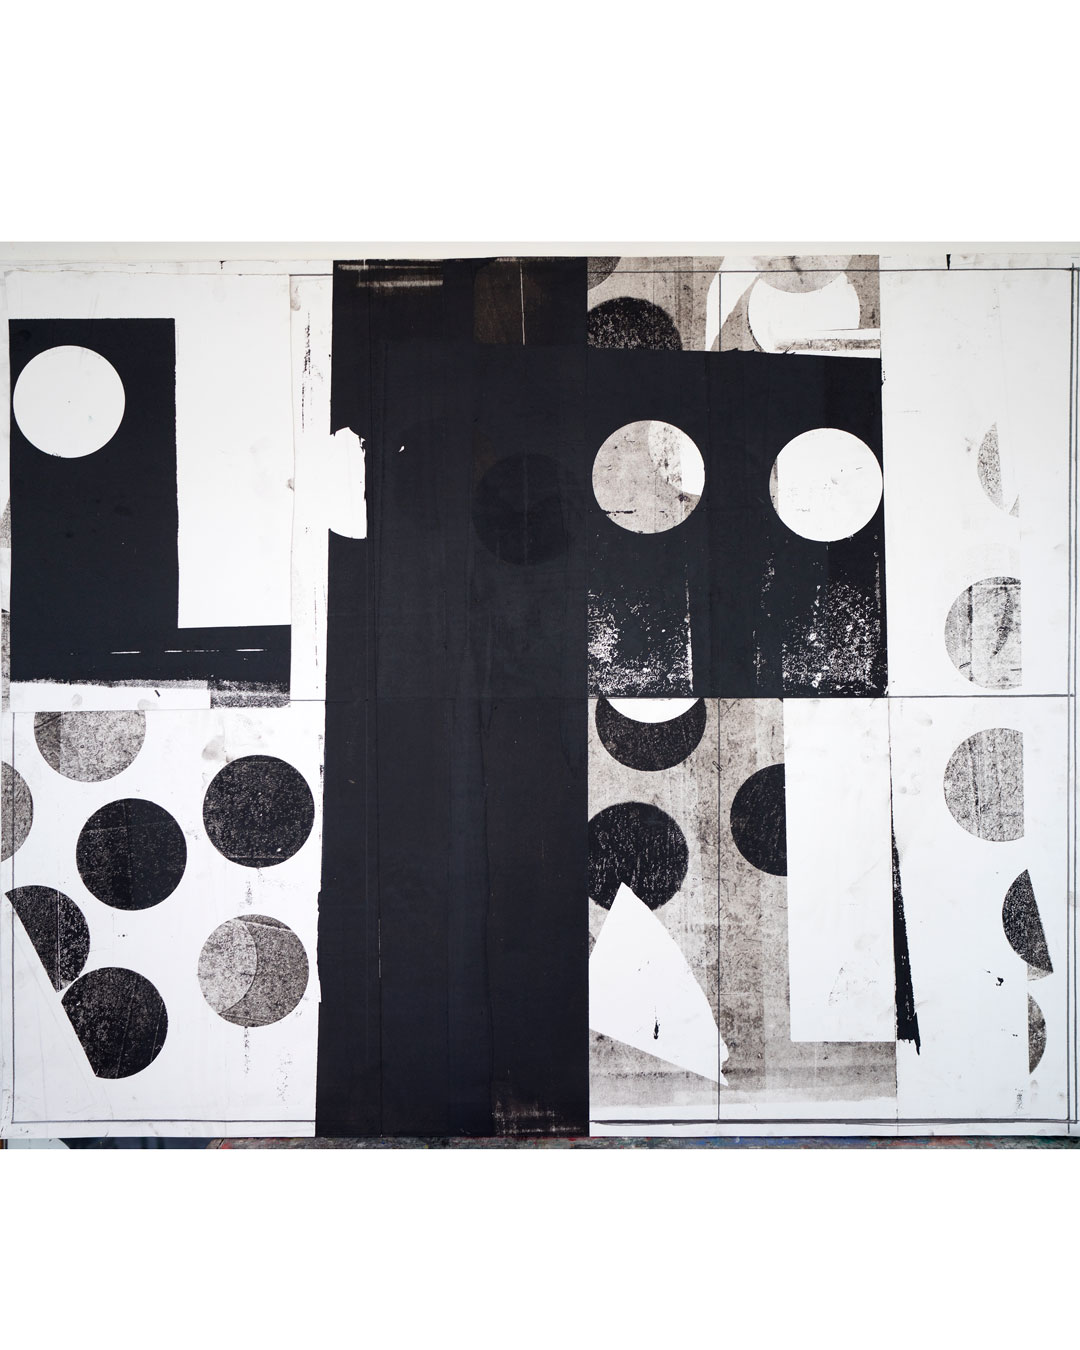 Piet Dieleman, zonder titel, 2020, collage, monotype inkt op oliebasis, potlood, acrylbindmiddel op papier, 1290 x 1590 mm, €3270